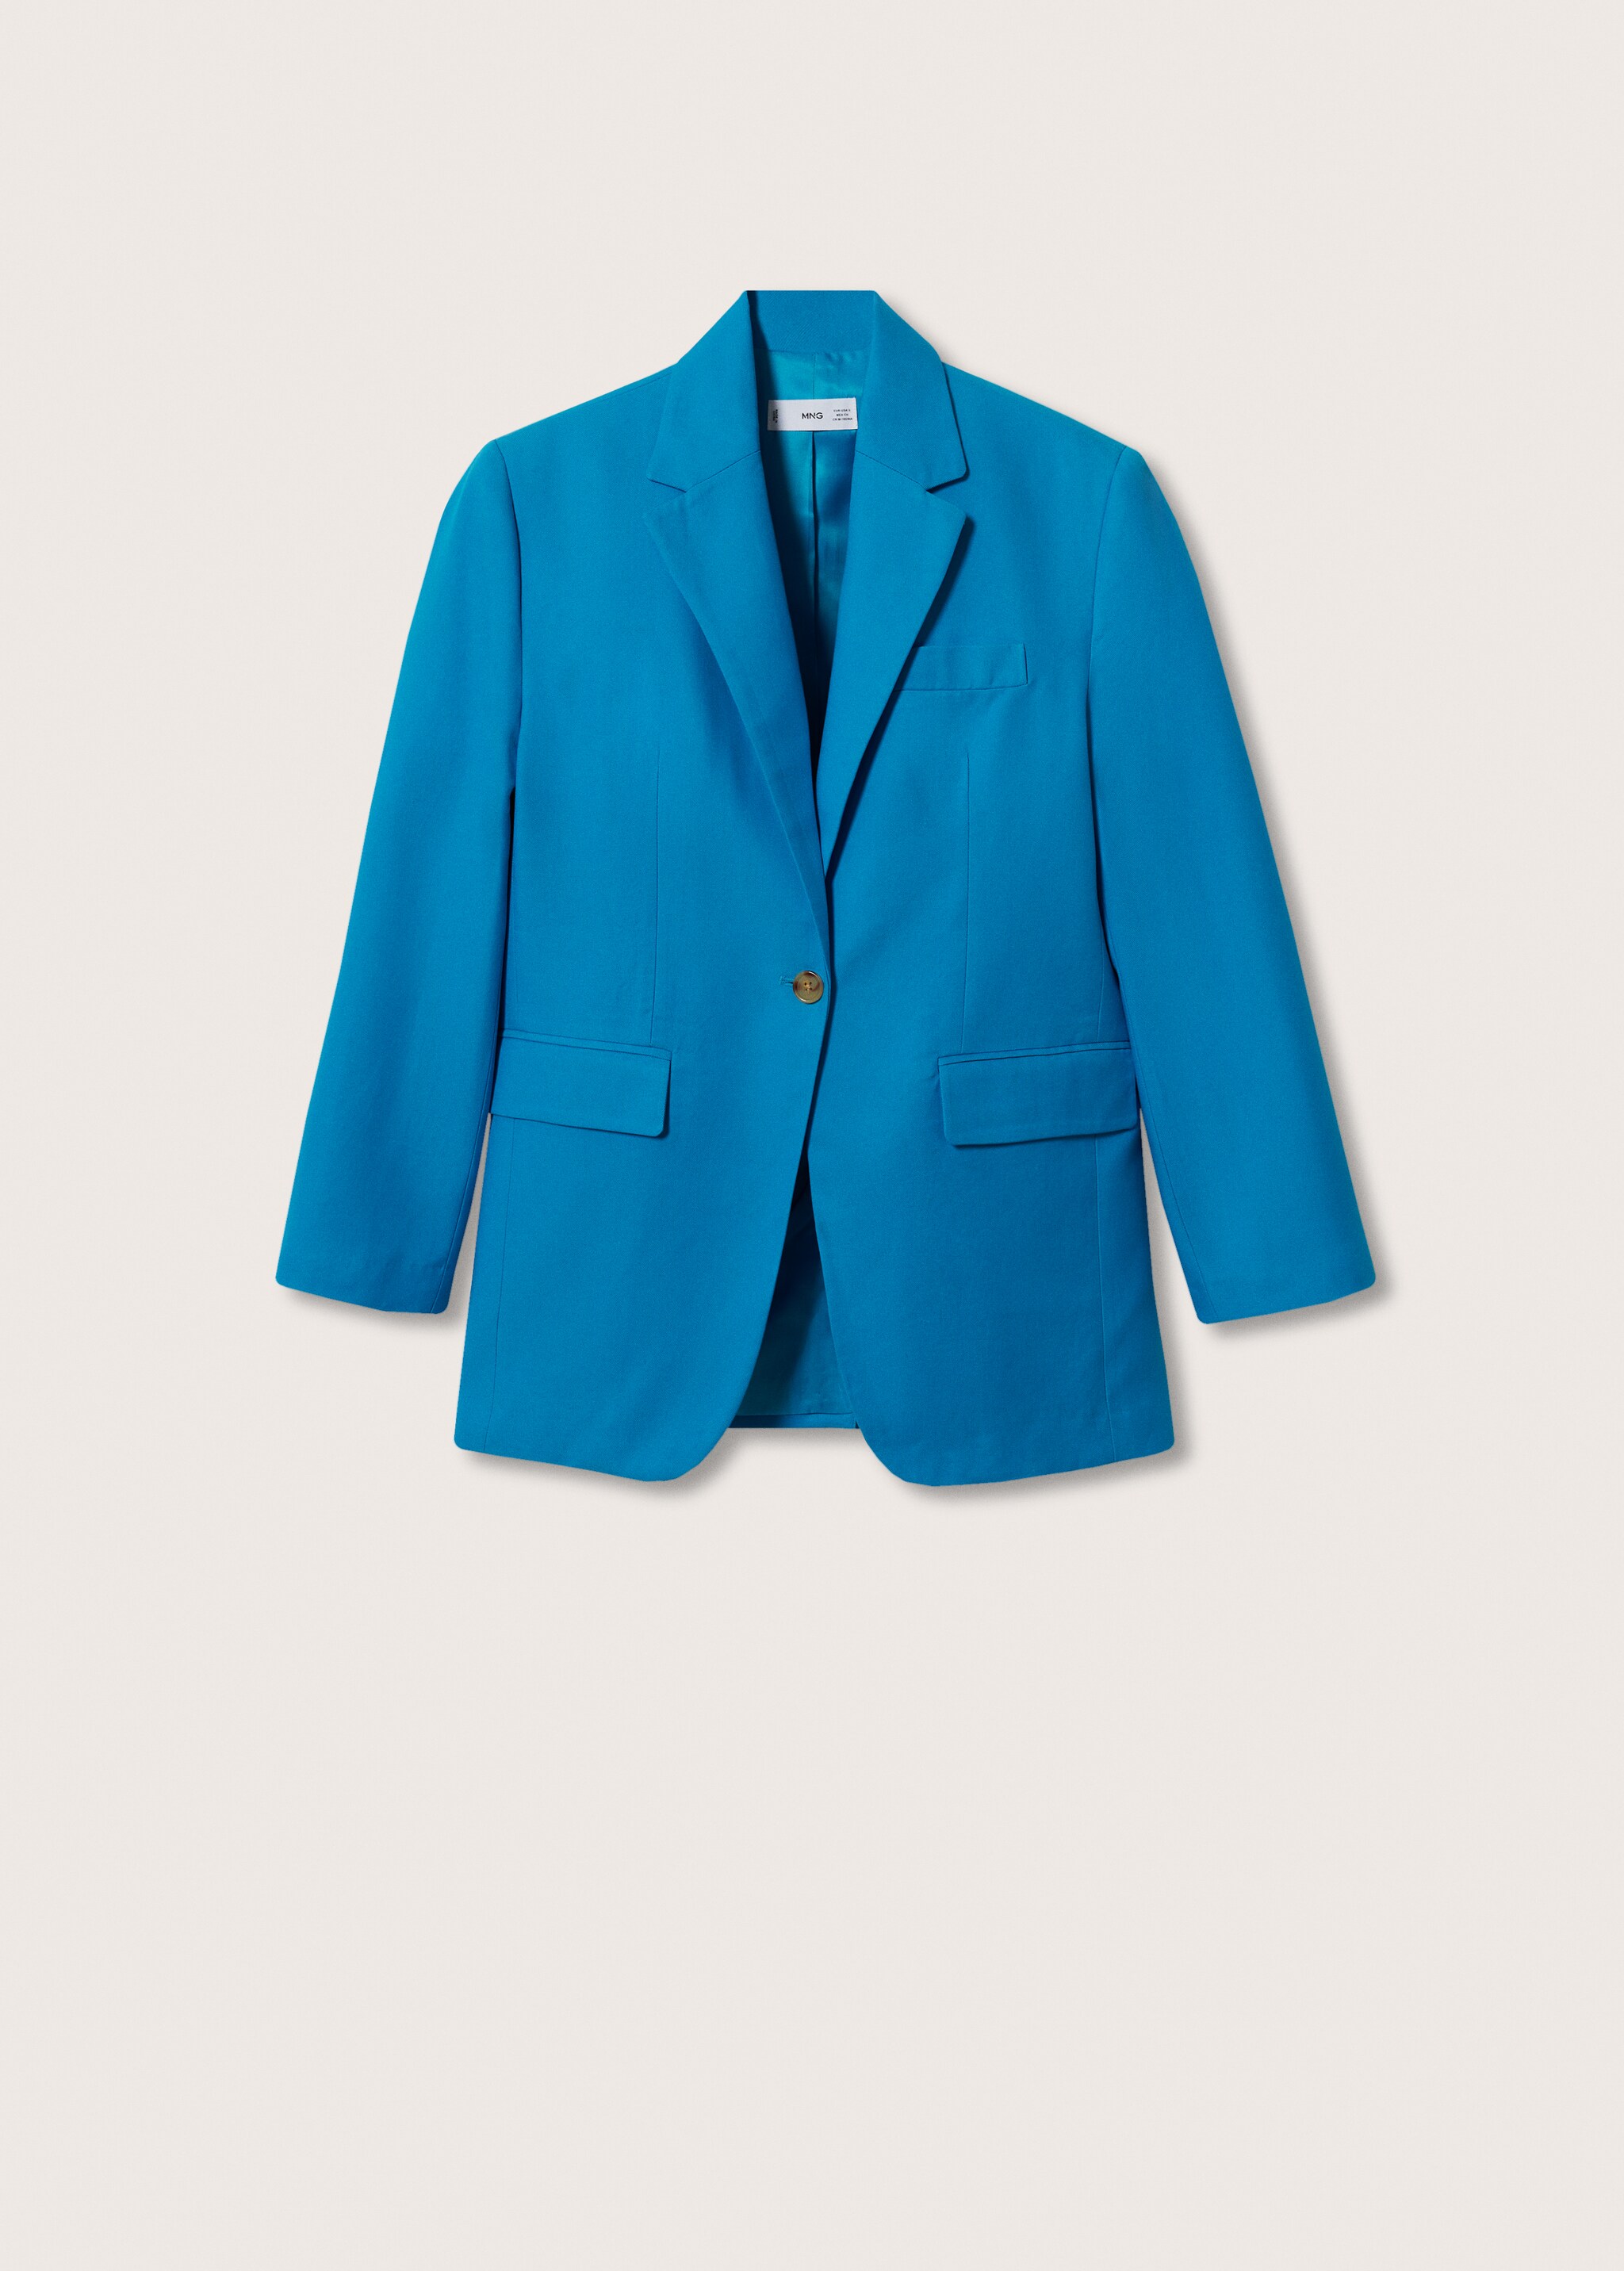 Oversized suit jacket - Article without model